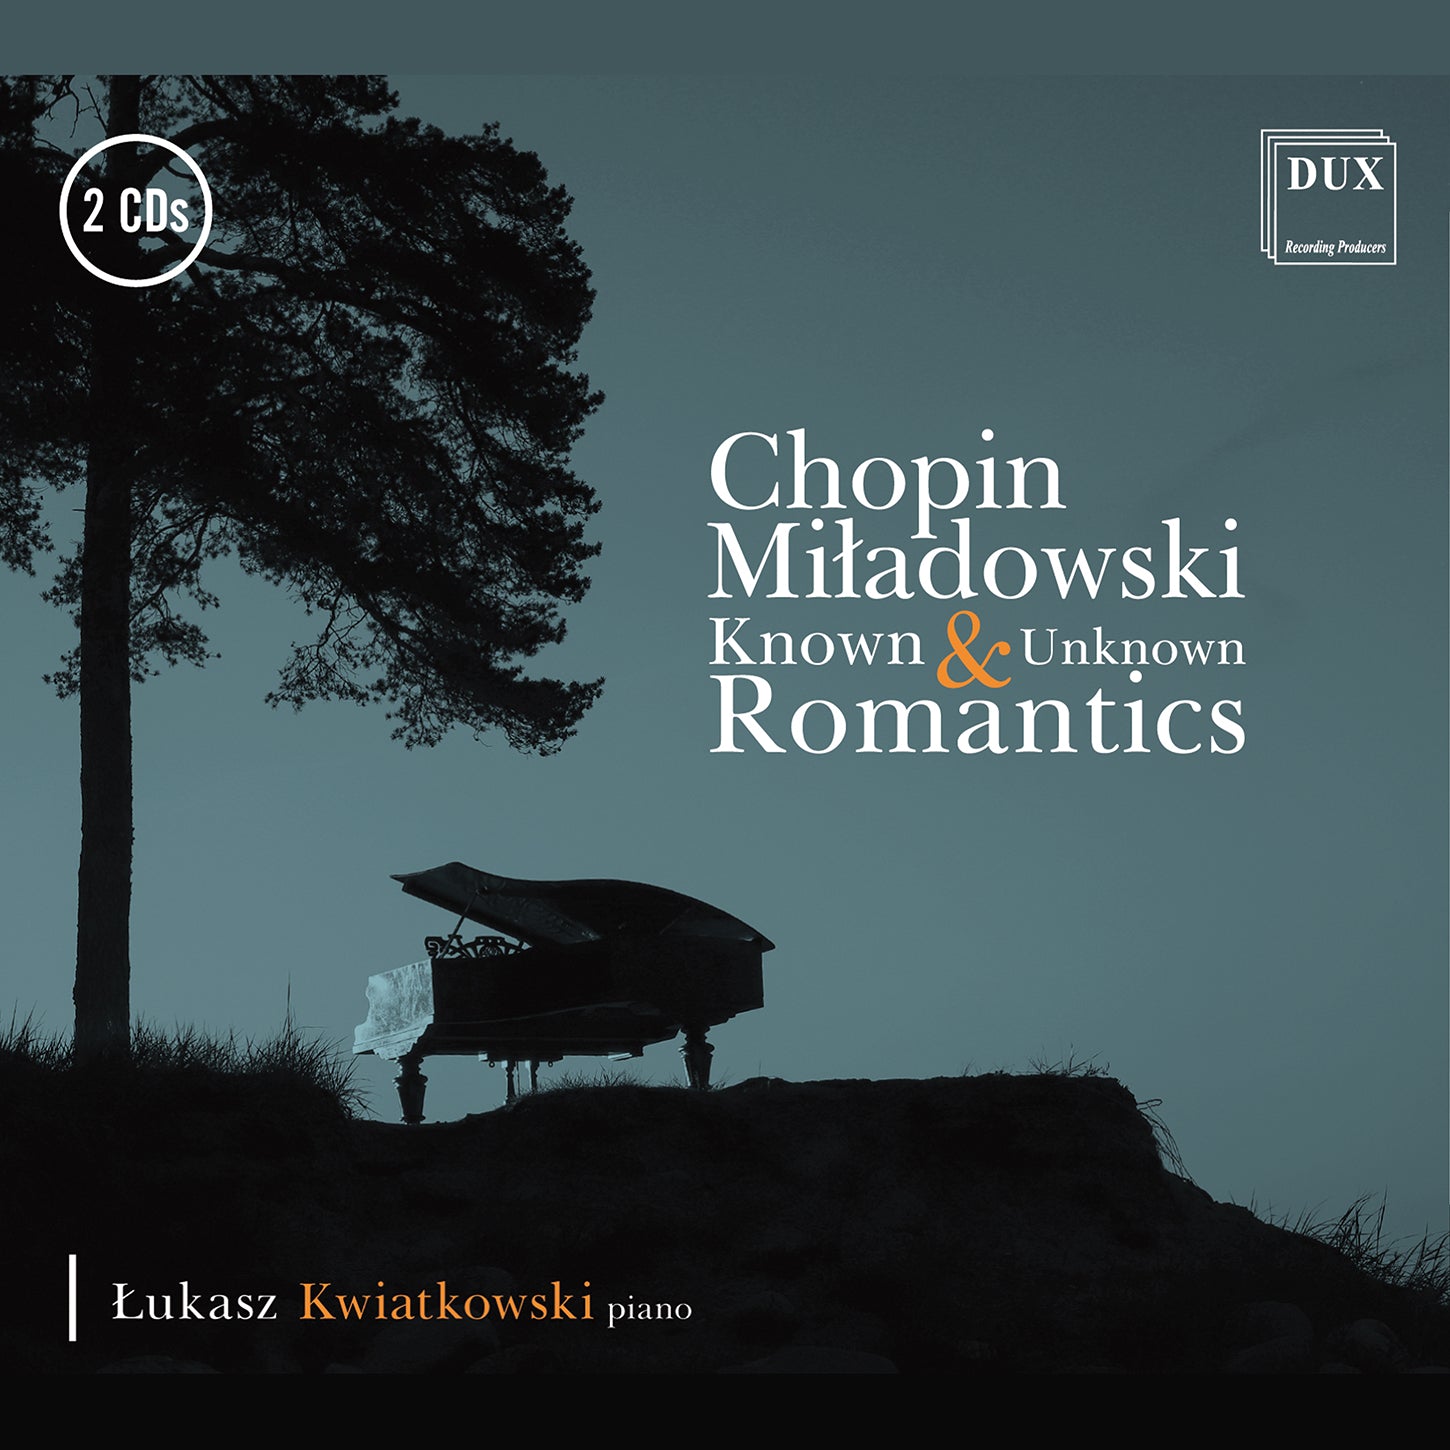 Known & Unknown Romantics - Chopin & Miladowski / Kwiatkowski